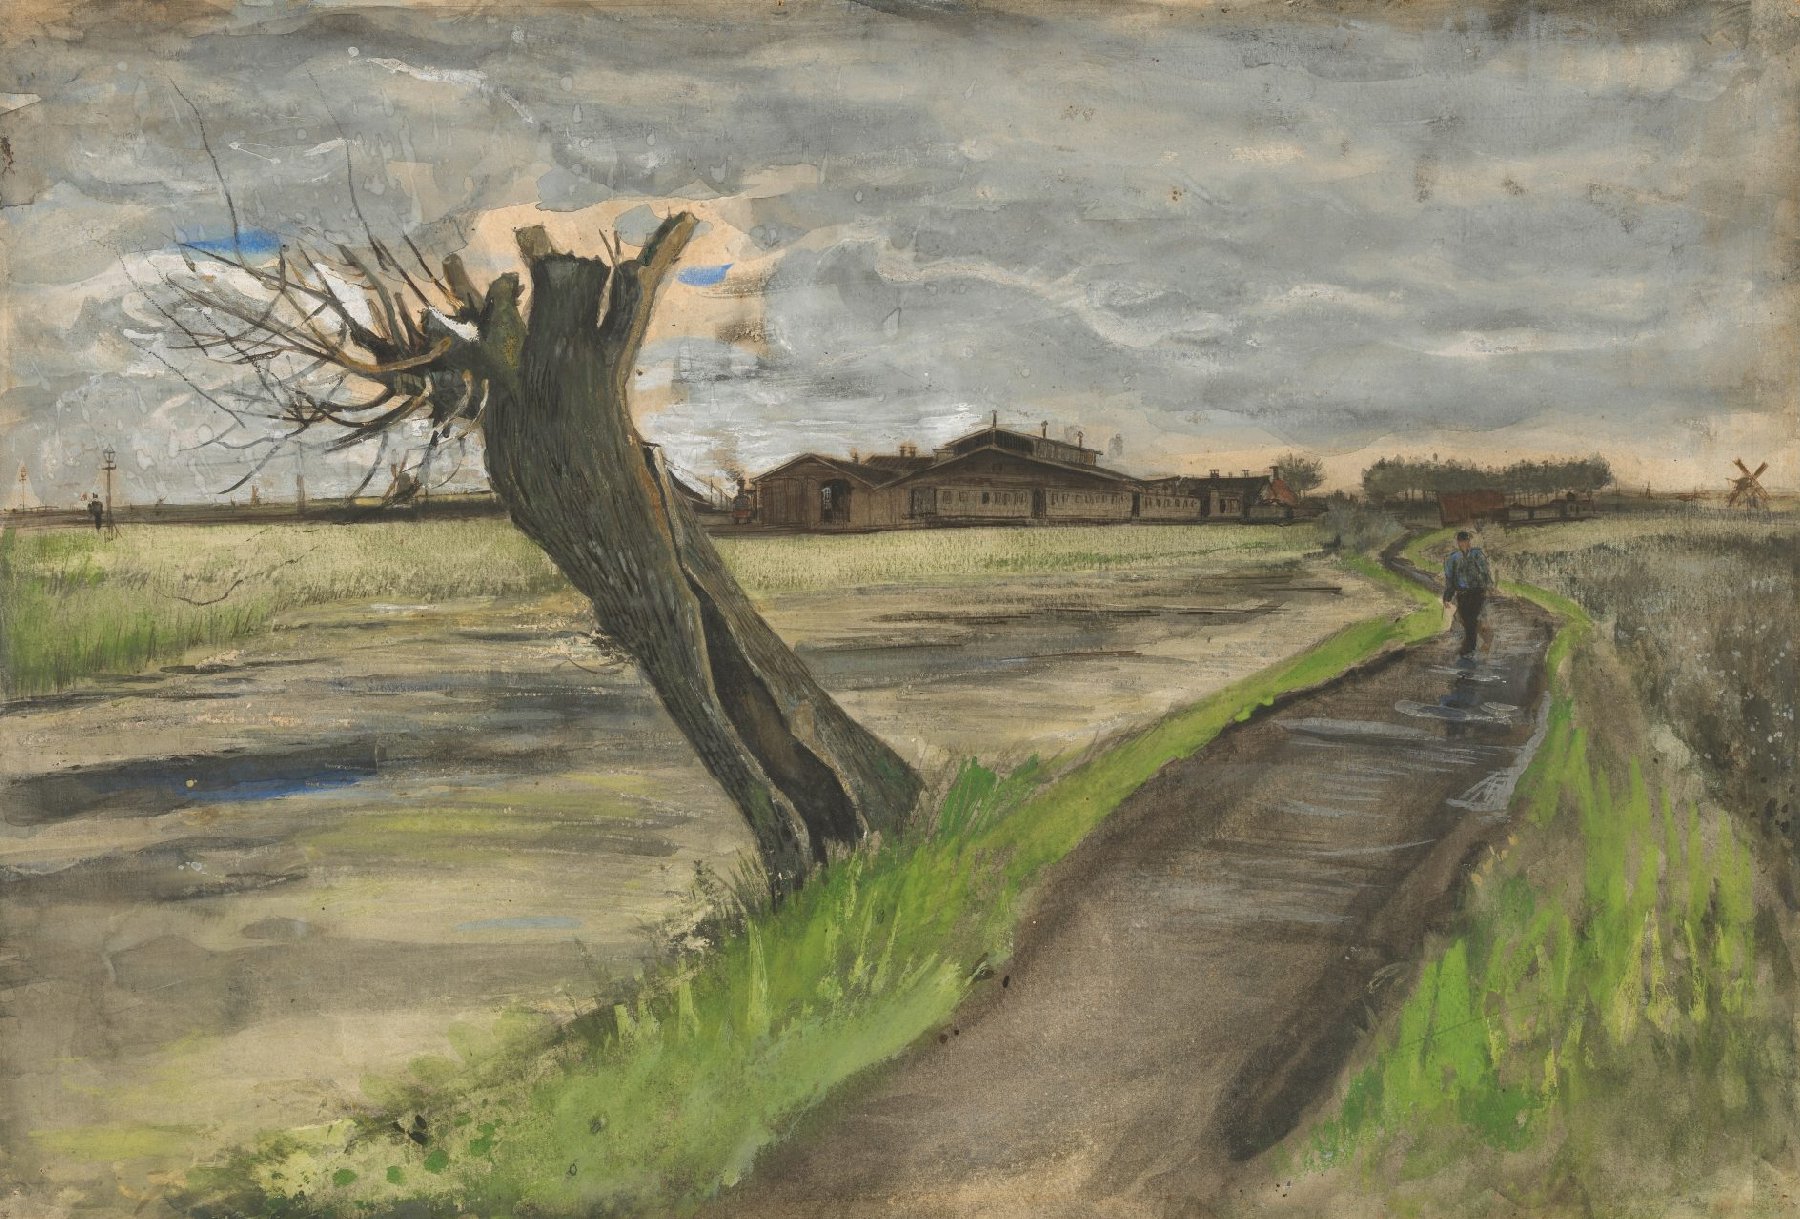 Knotwilg Vincent van Gogh (1853 - 1890), Den Haag, juli 1882